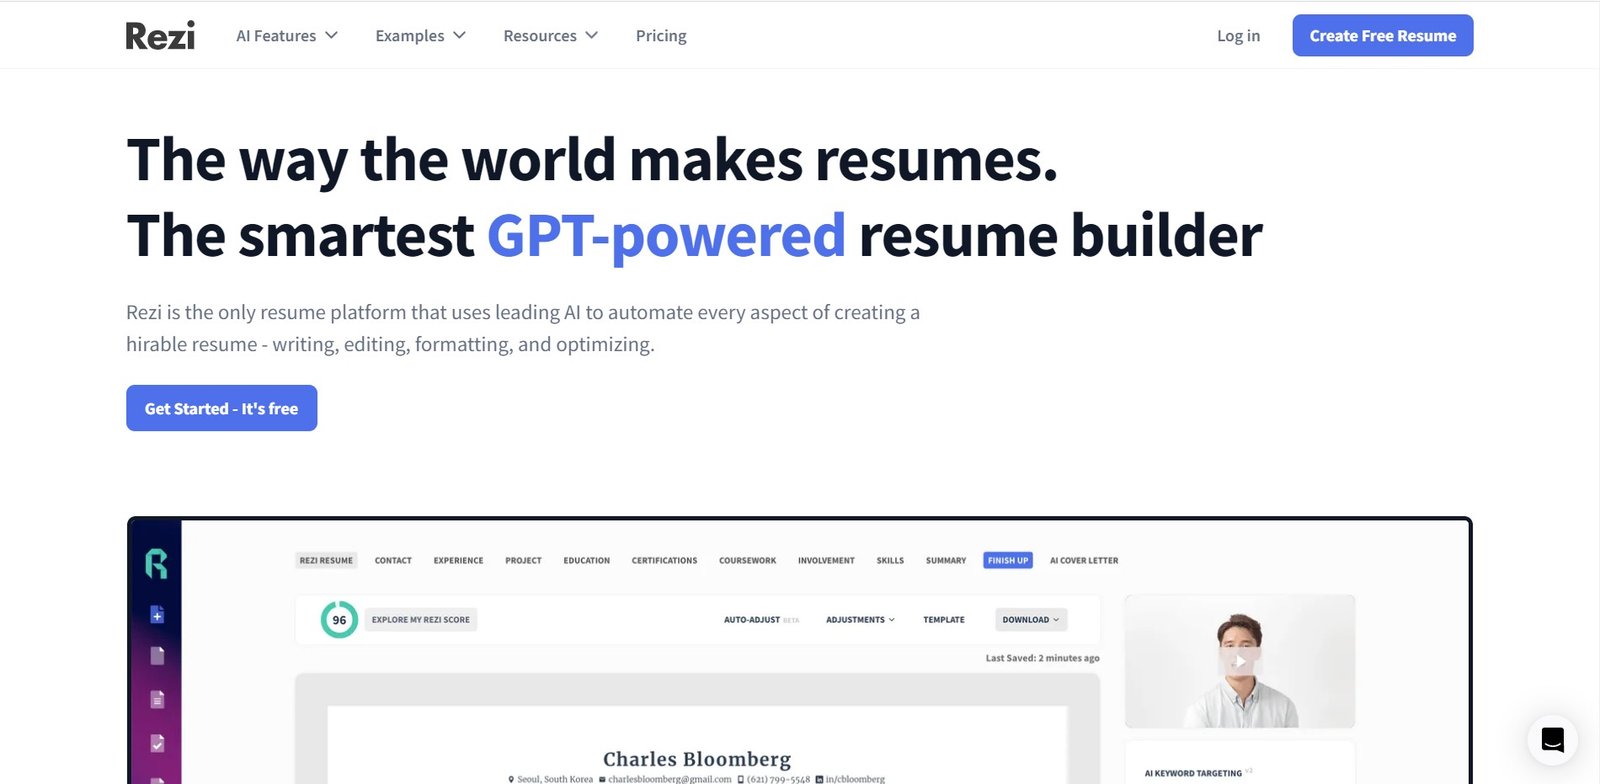 Rezi is an AI-powered resume builder designed to help job seekers create professional